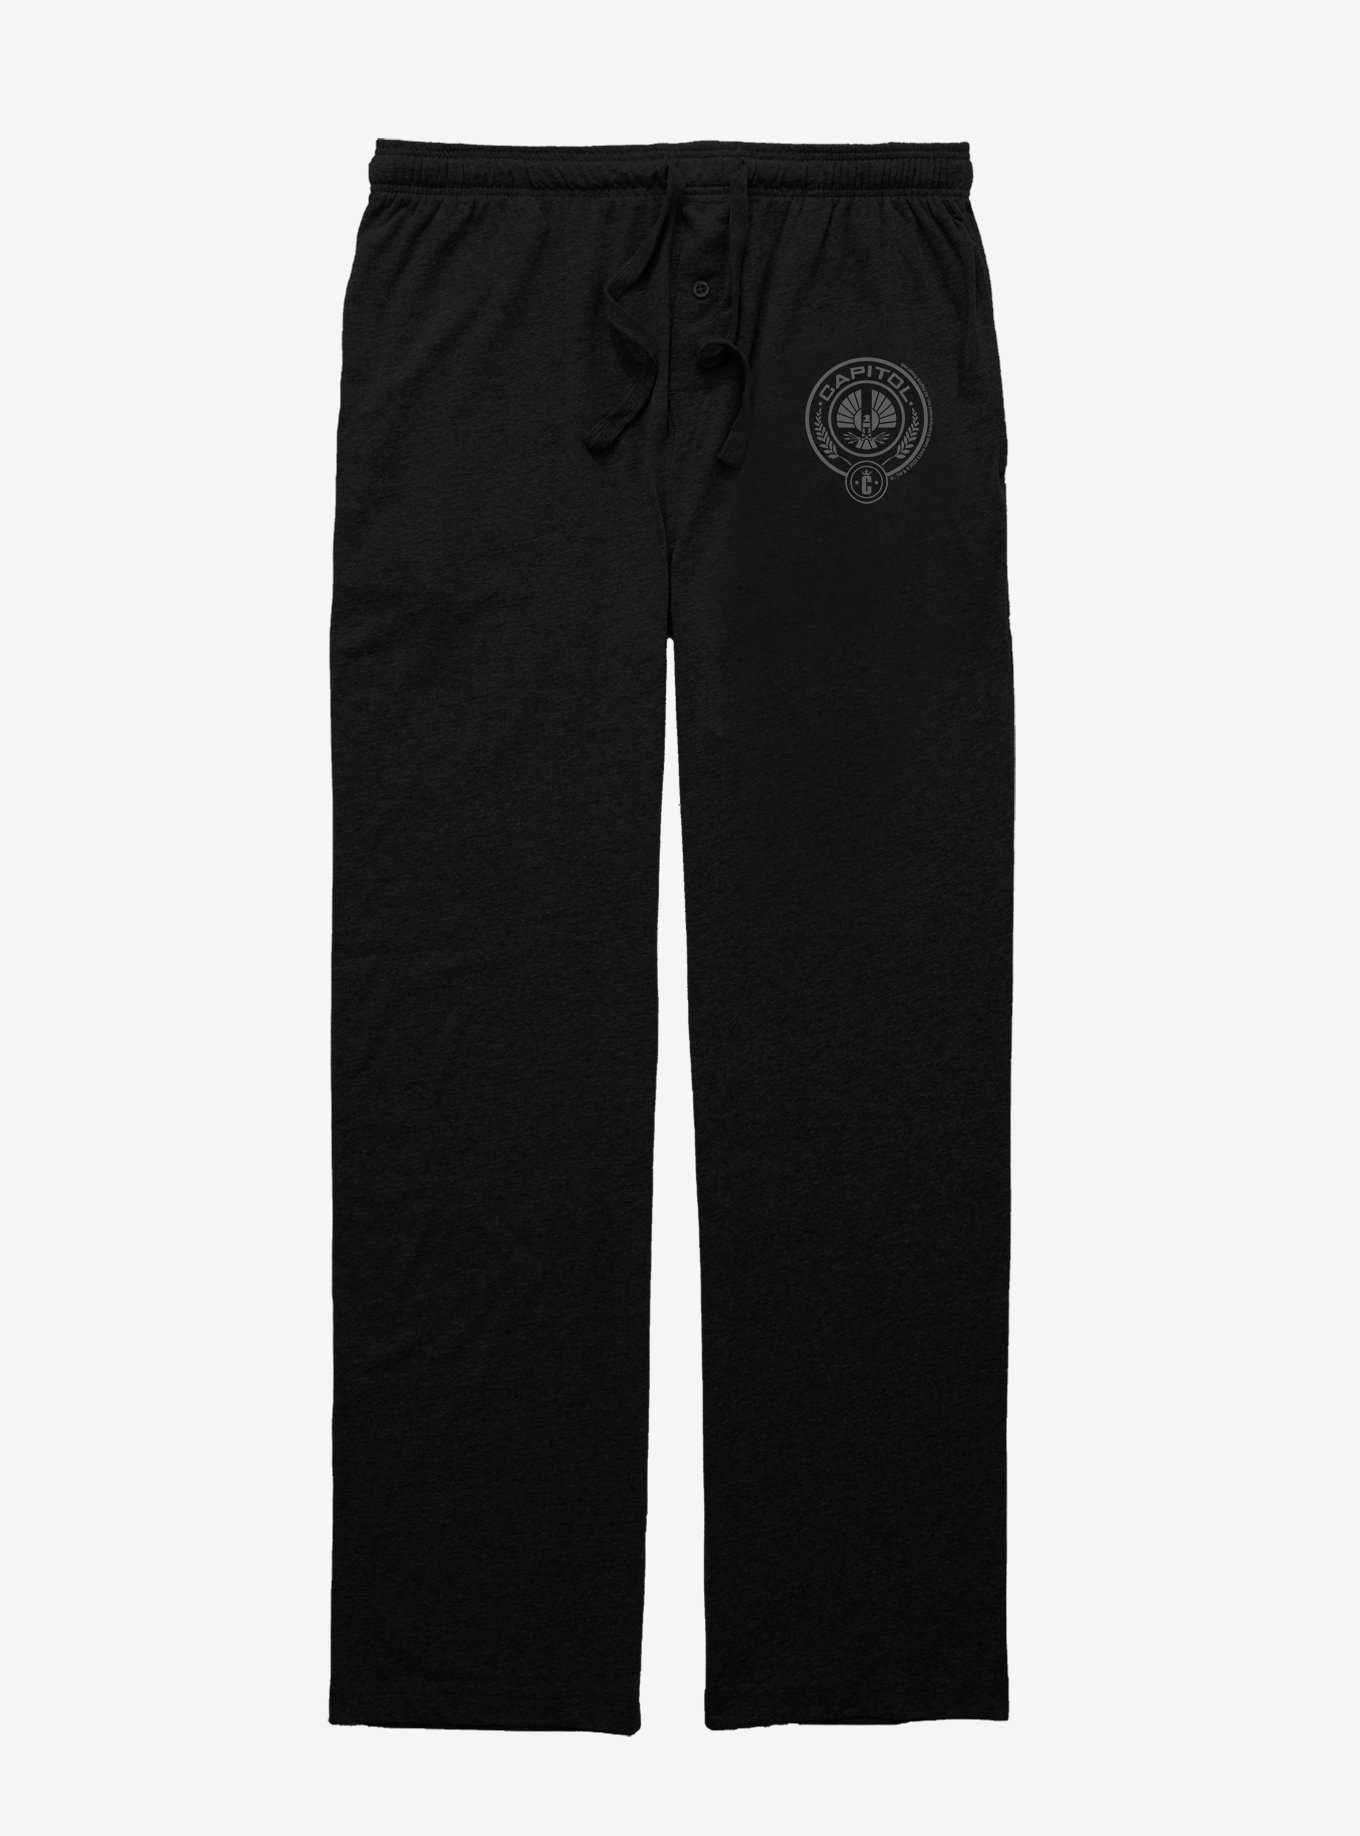 Hunger Games Capitol Emblem Pajama Pants, , hi-res